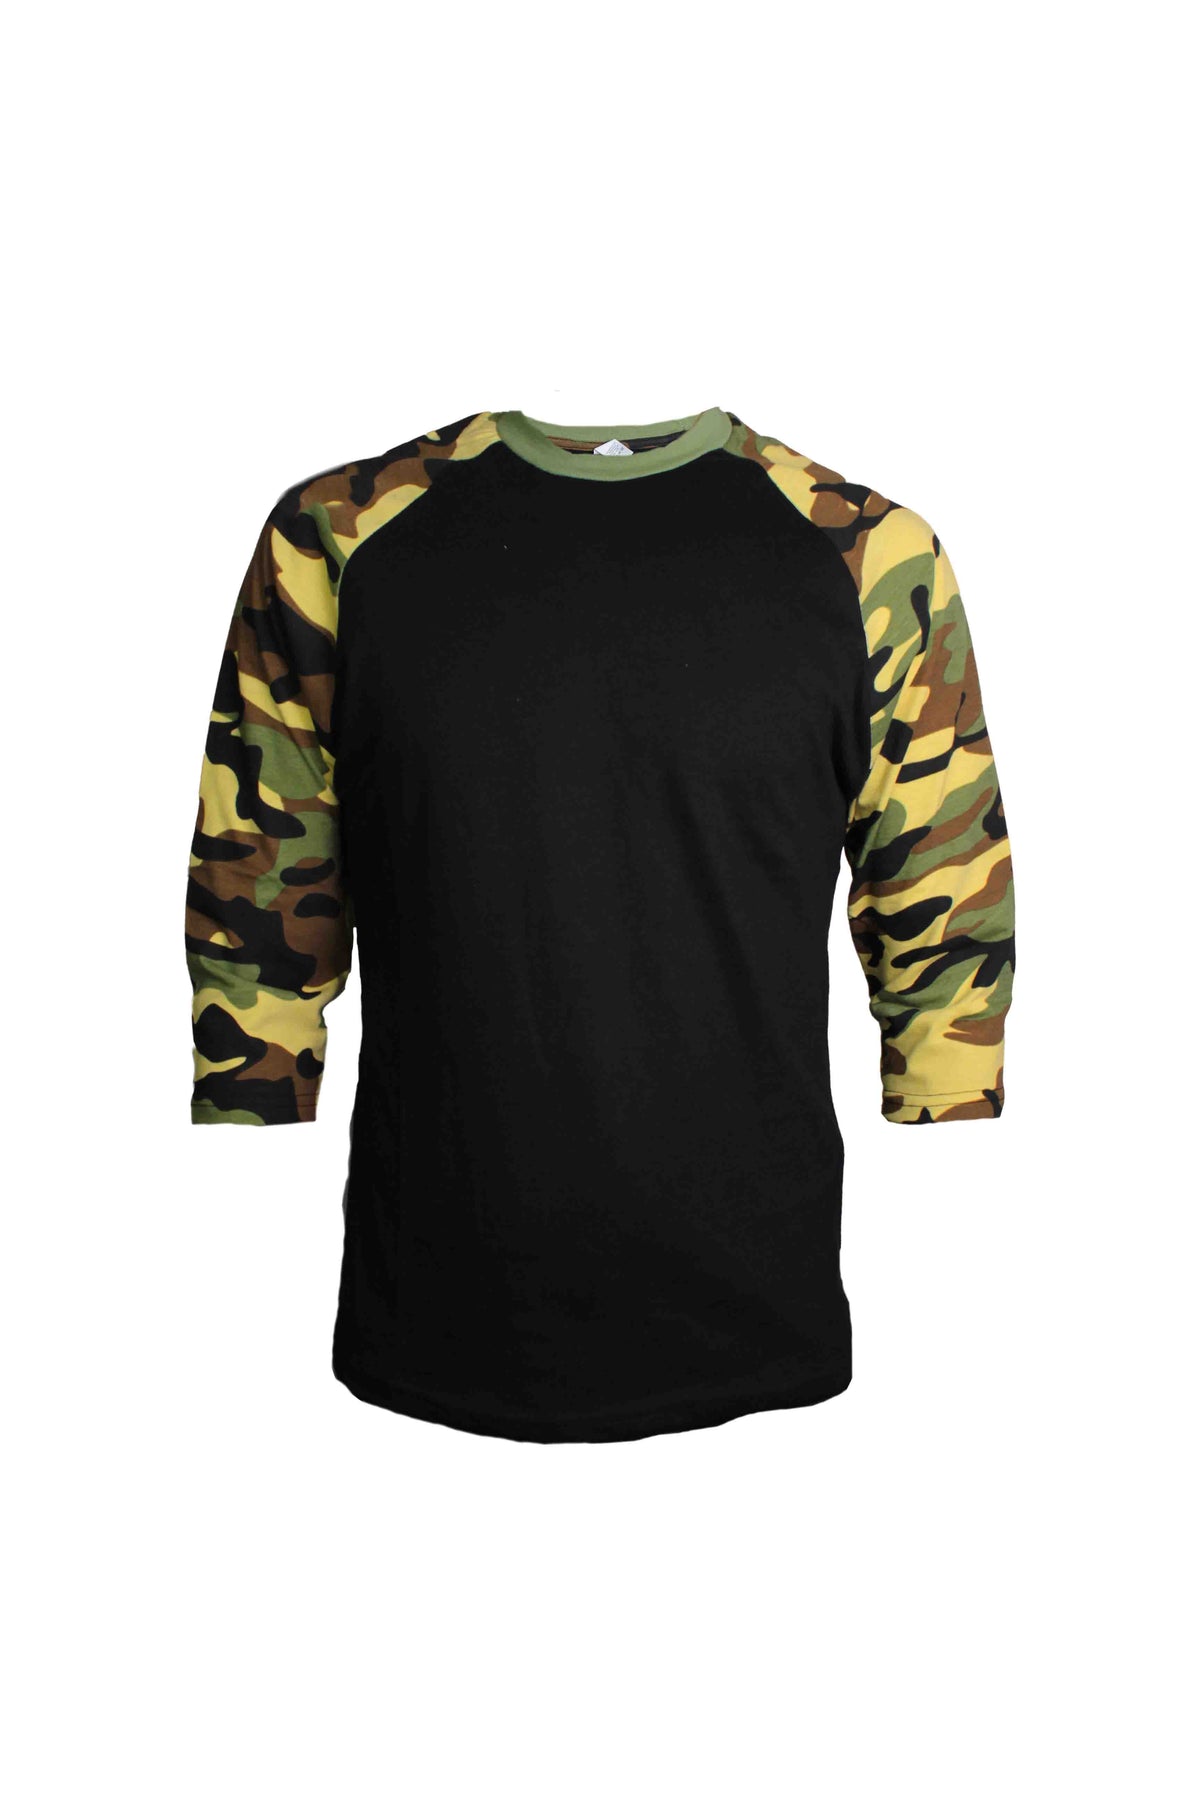 Laviva Sports™ Raglan 3/4 Sleeves Baseball Shirts – Aviva Wholesale